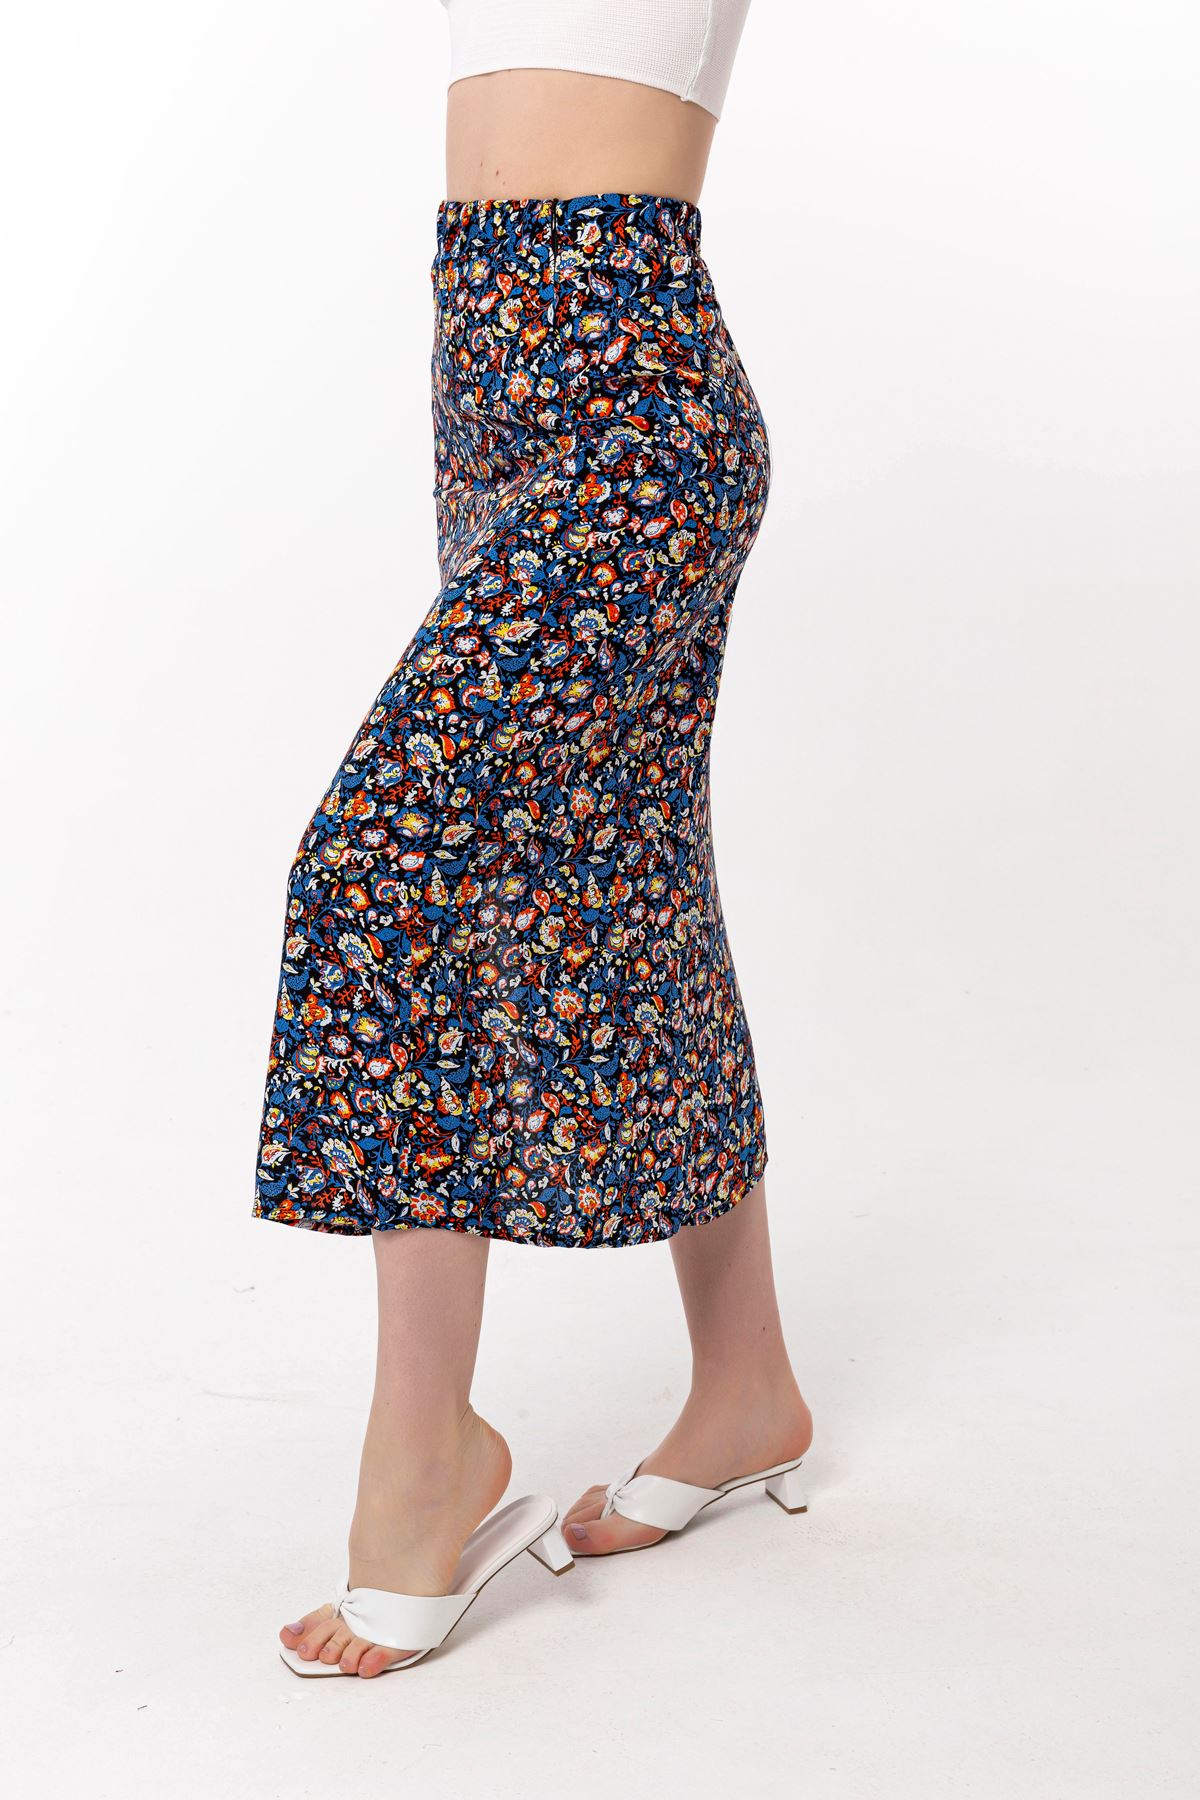 Below Knee Straight Crispy Floral Print Slit Women'S Skirt - Navy Blue 